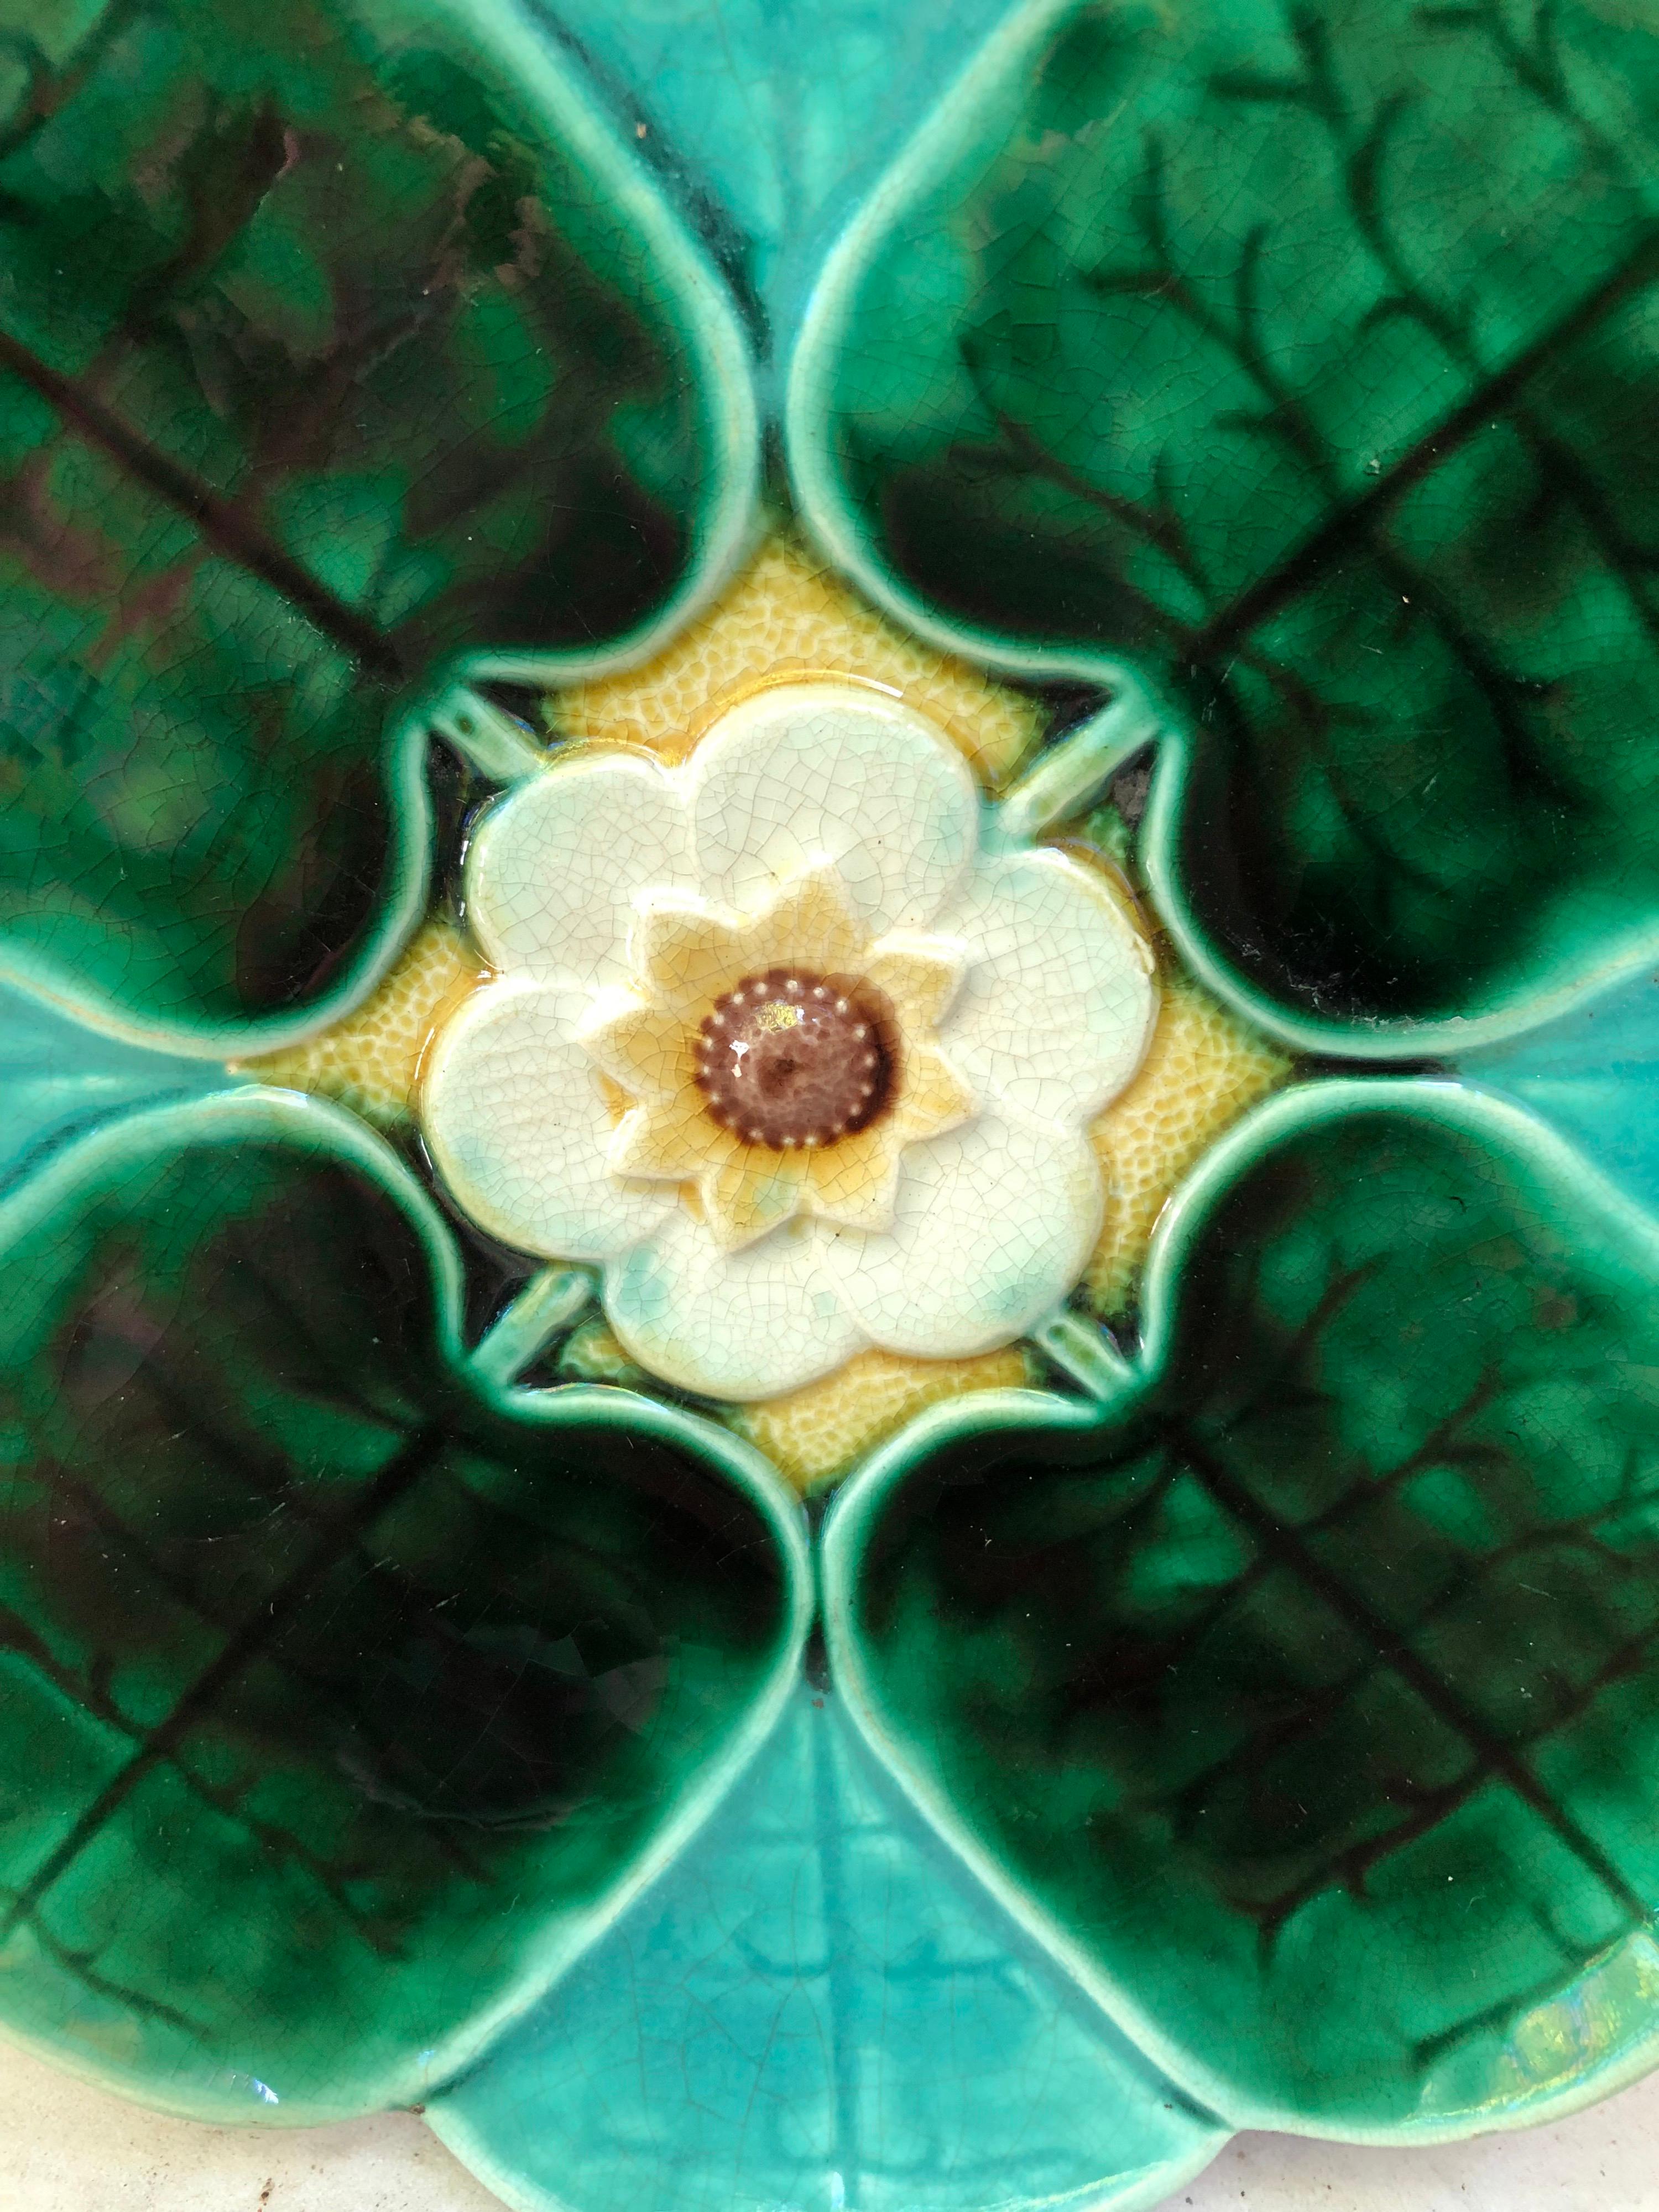 American Majolica Water Lily Plate signed Etruscan Majolica Circa 1890.
Unusual colors.